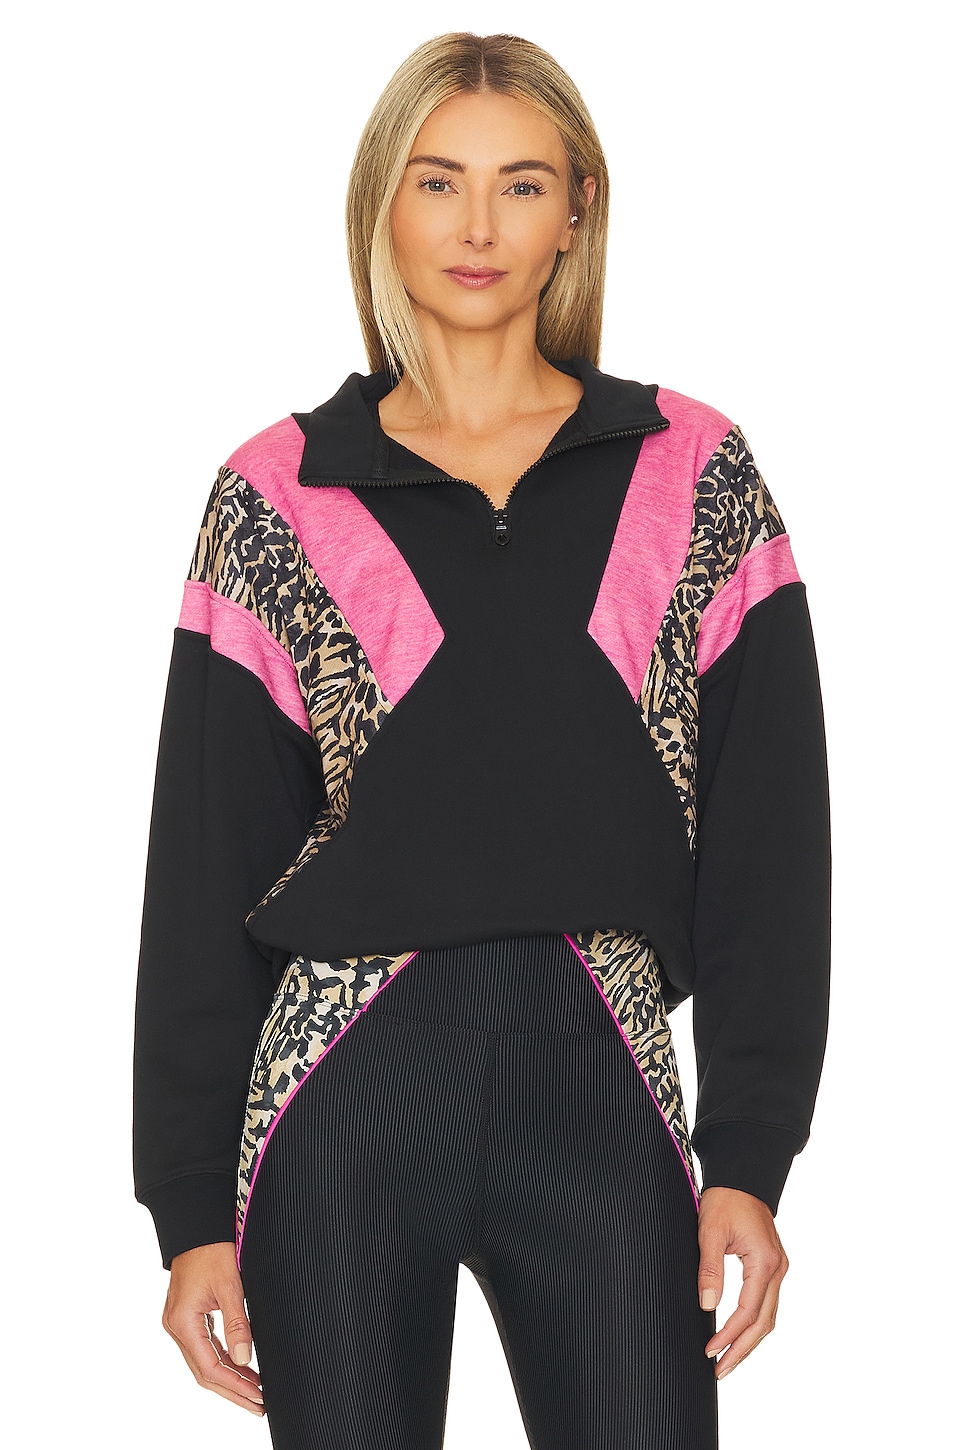 Victoria's Secret Pink Leopard Print Sweatshirt